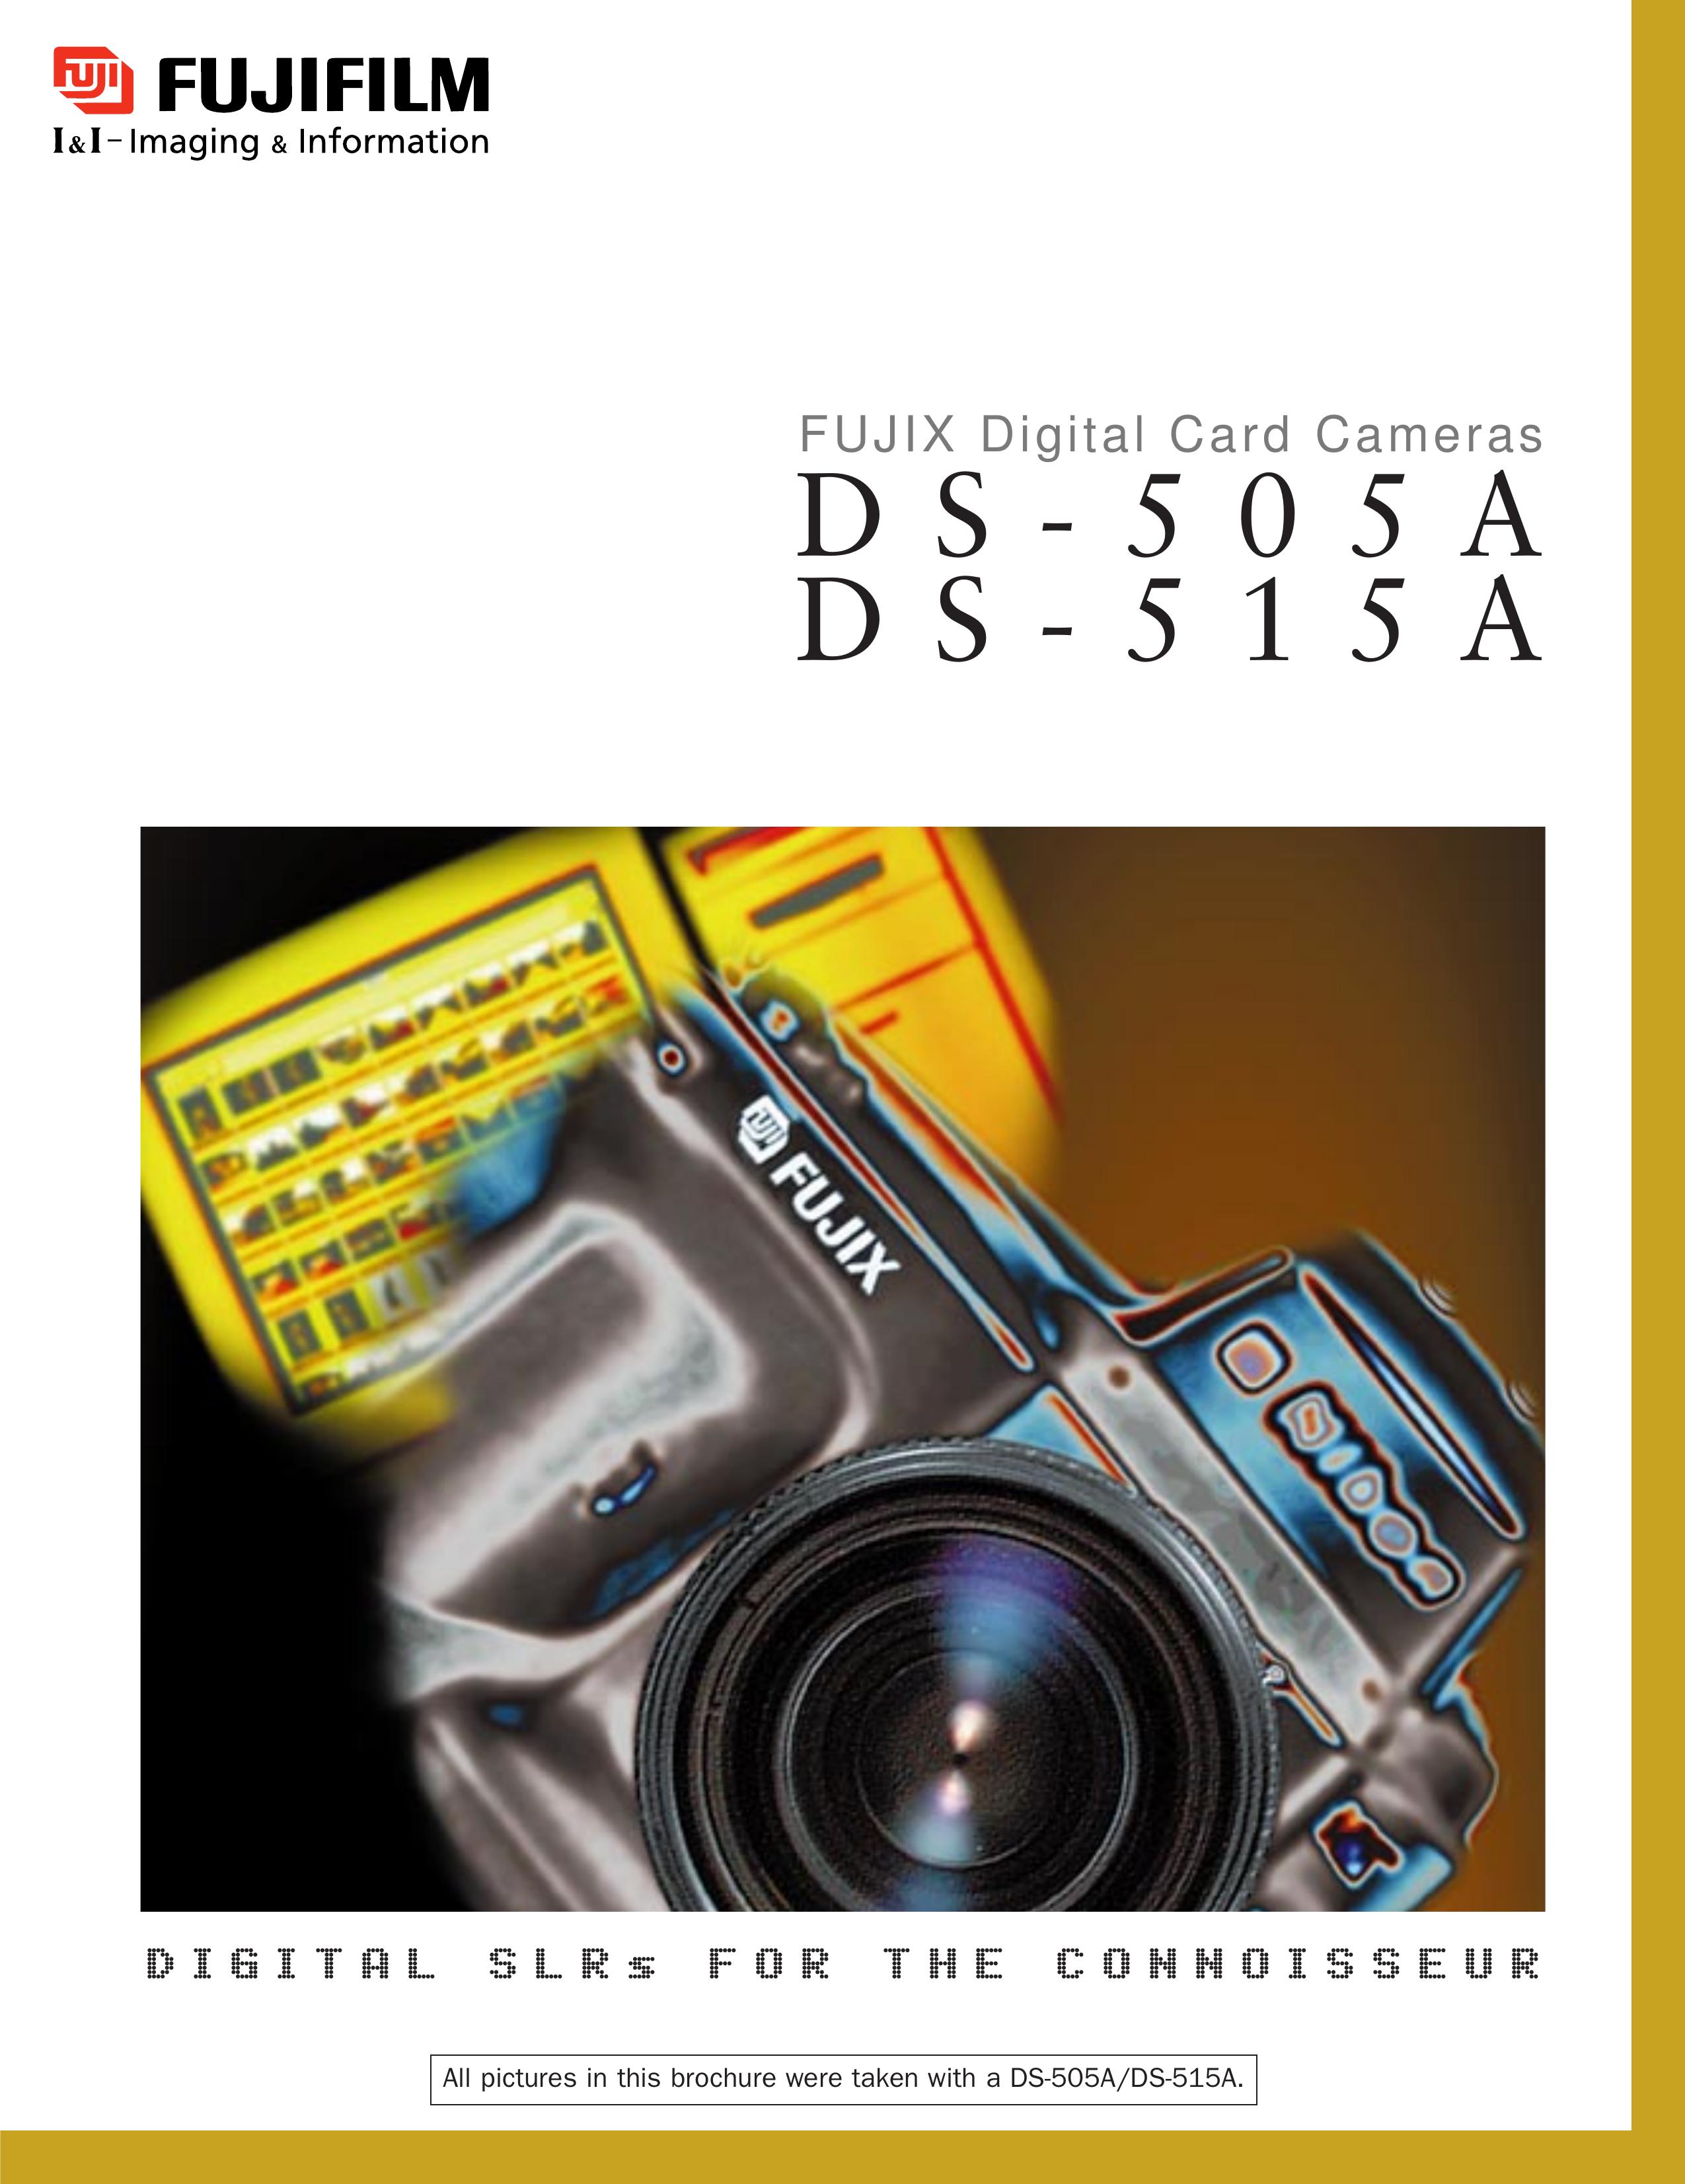 FujiFilm DS-515A Camera Accessories User Manual